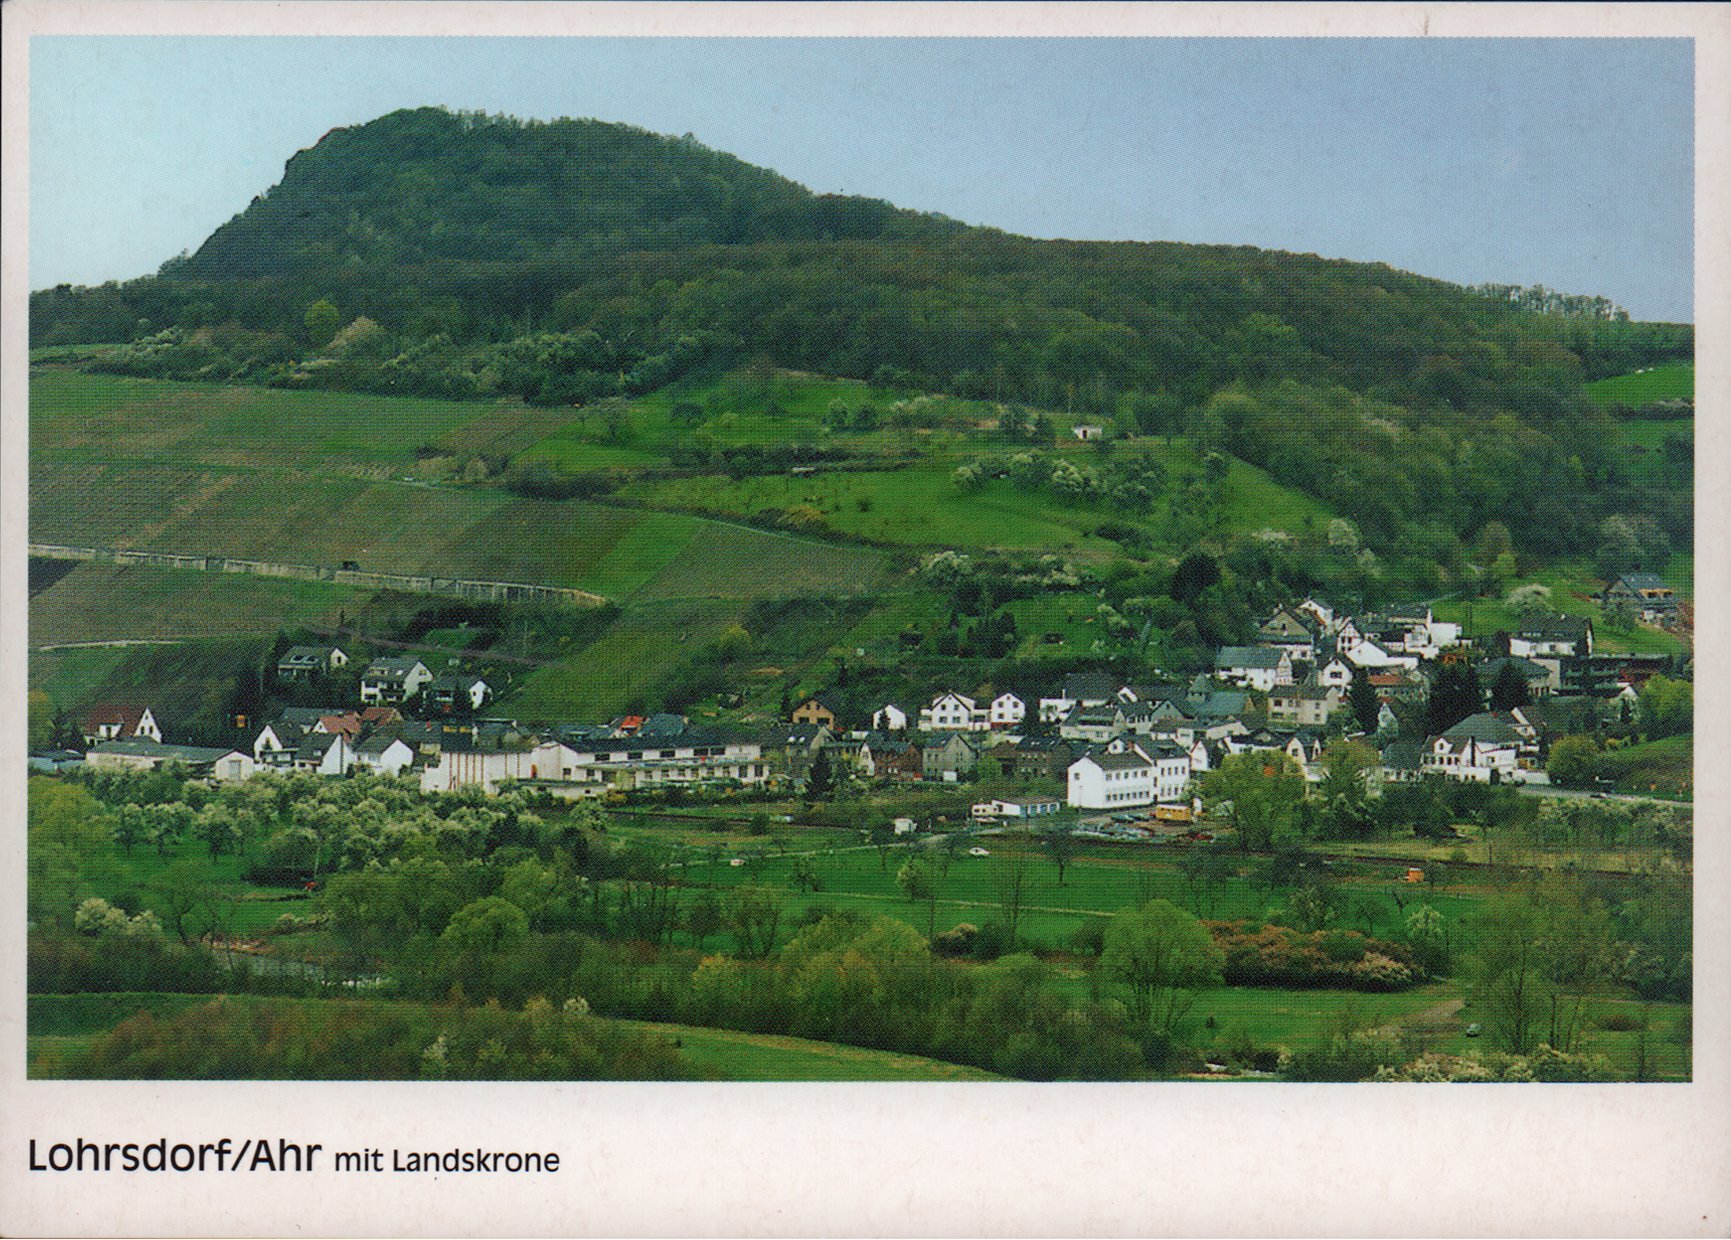 Ansichtskarte "Lohrdorf/Ahr mit Landskrone" (Norbert Becker, Lohrsdorf CC BY-NC-SA)